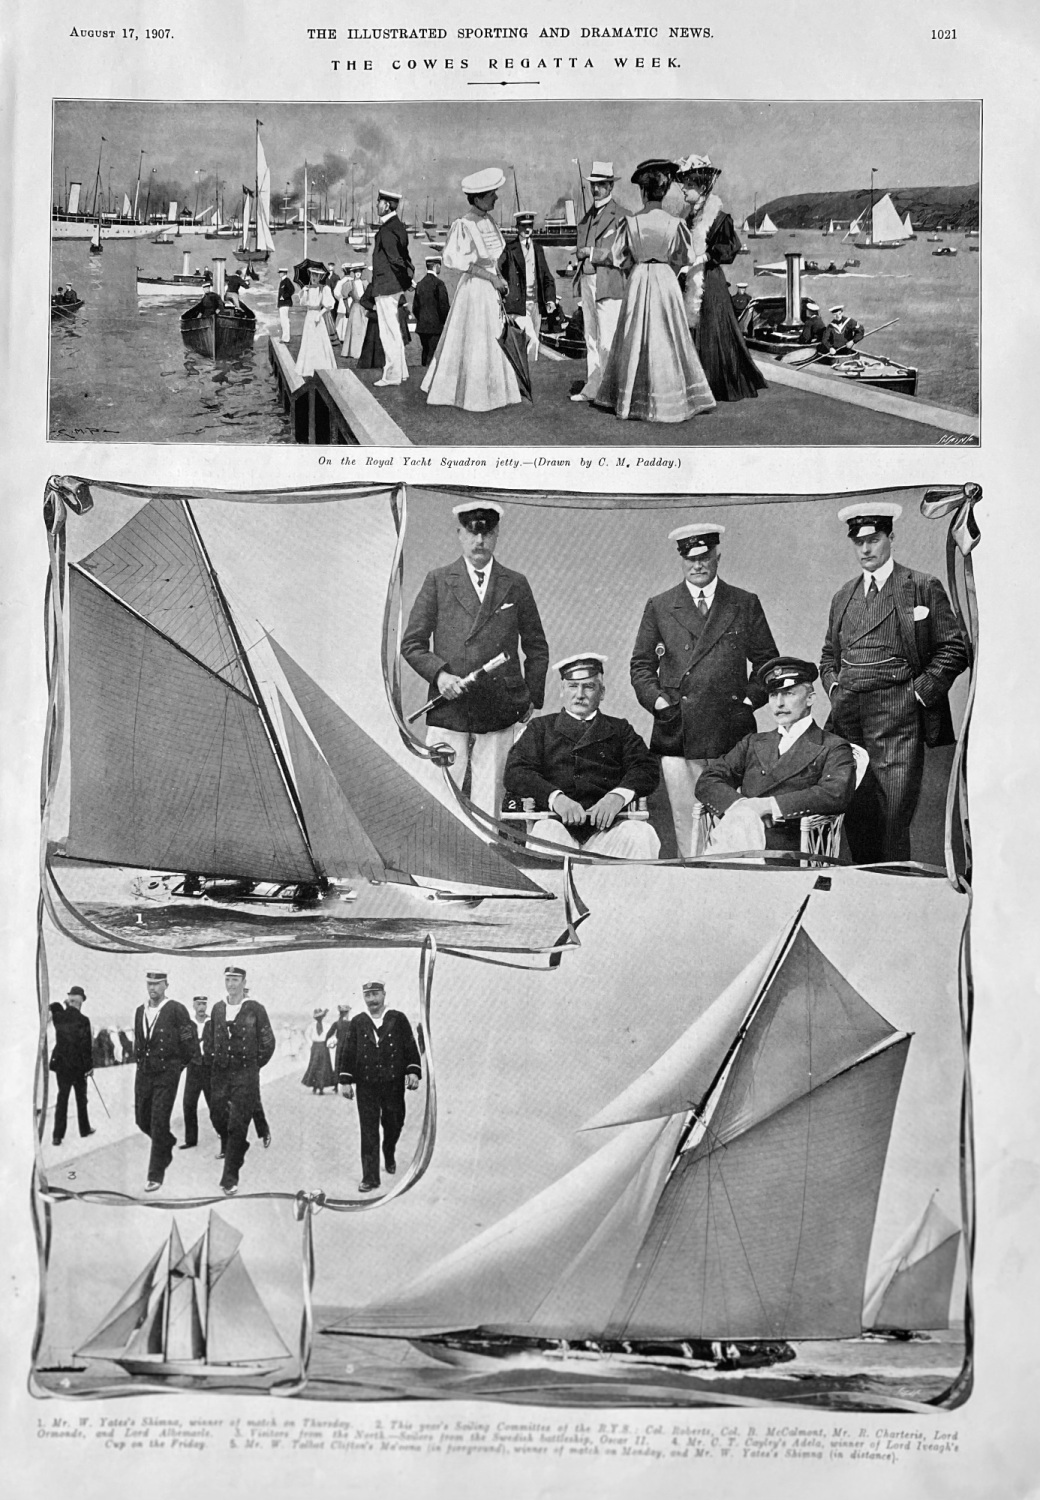 The Cowes Regatta Week.  1907.